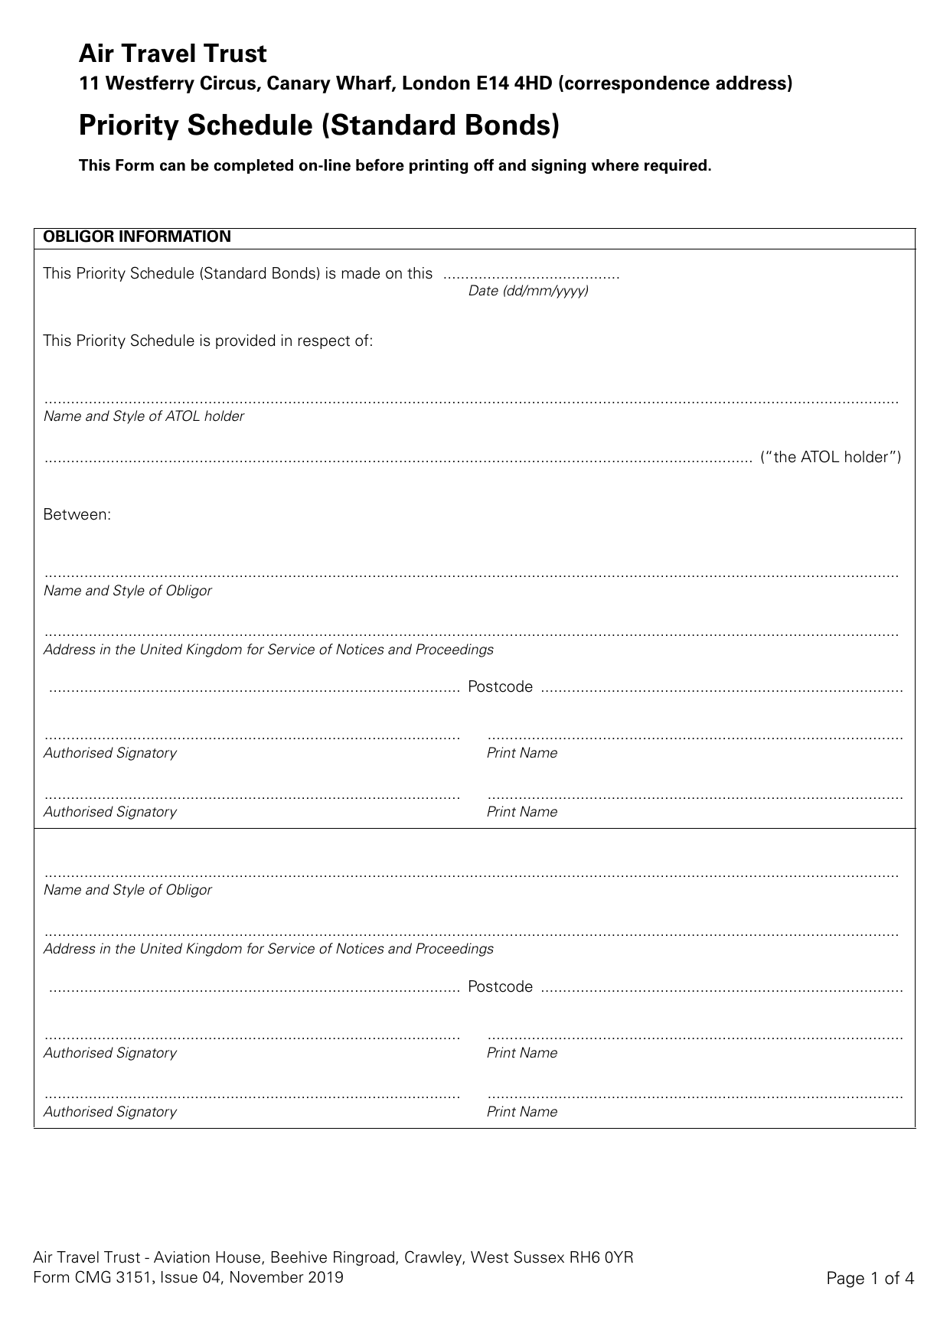 Form CMG3151 Priority Schedule (Standard Bonds) - United Kingdom, Page 1